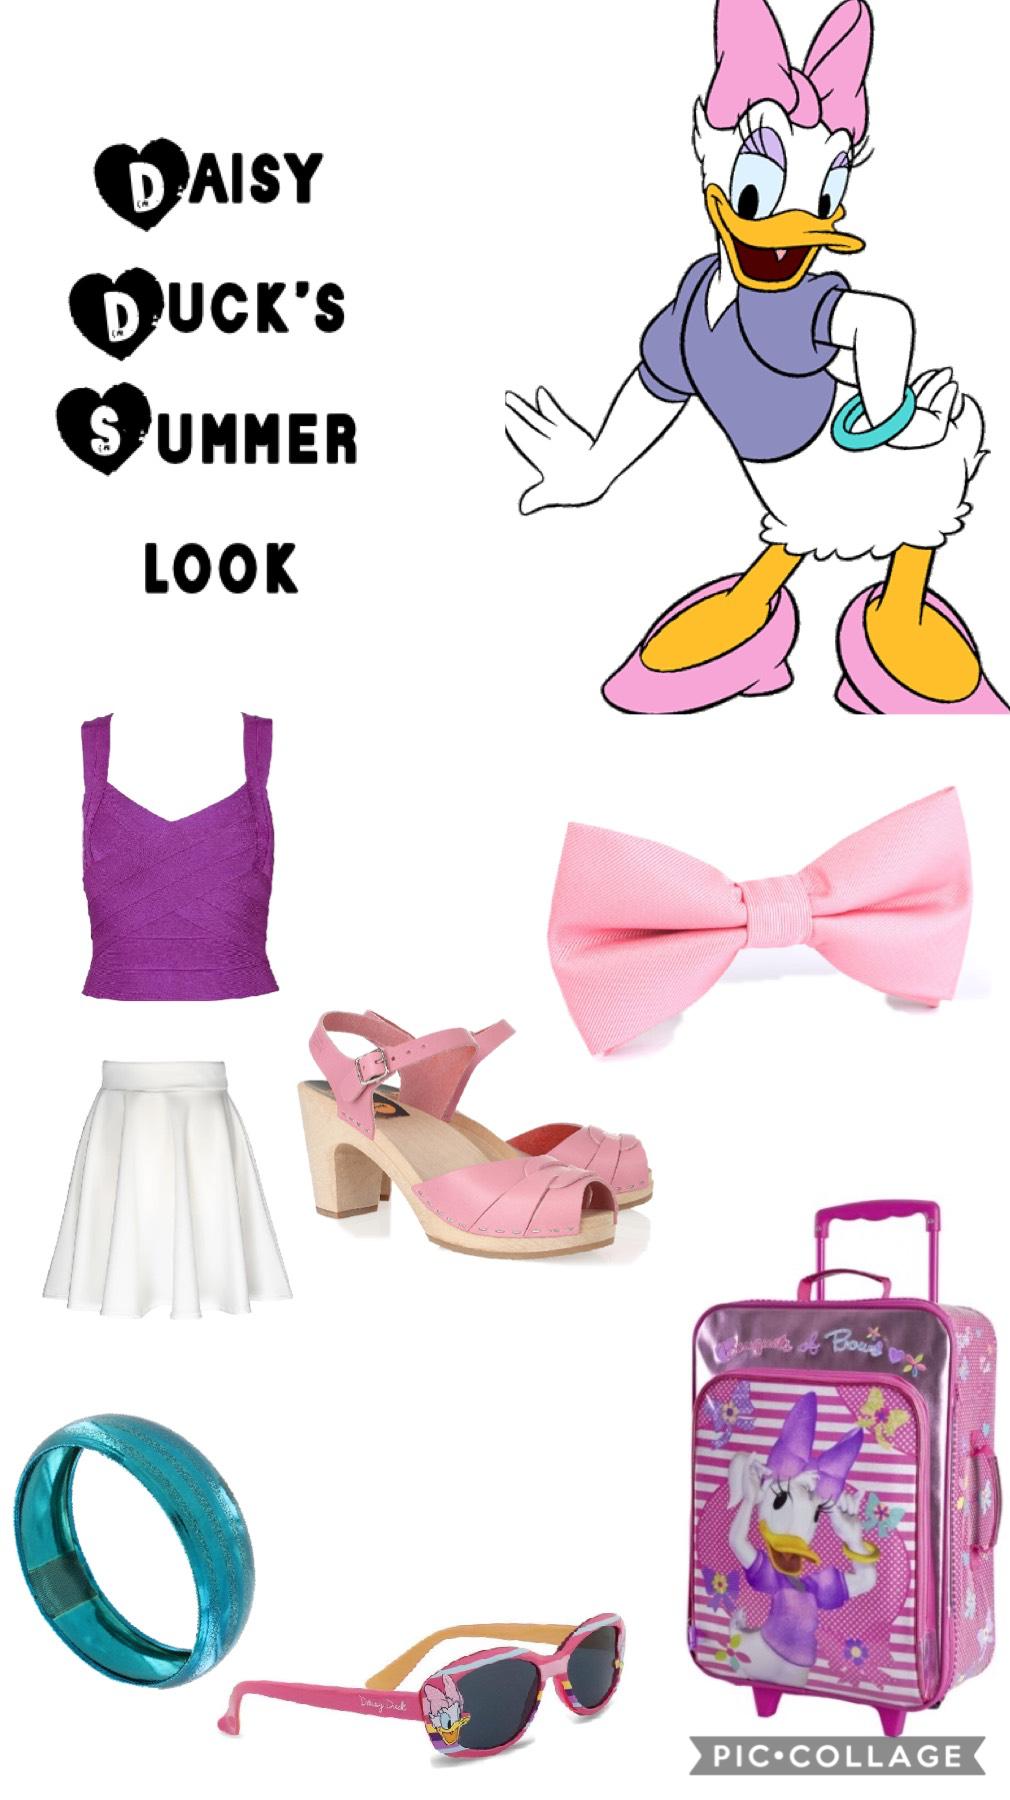 Daisy Duck’s summer look 